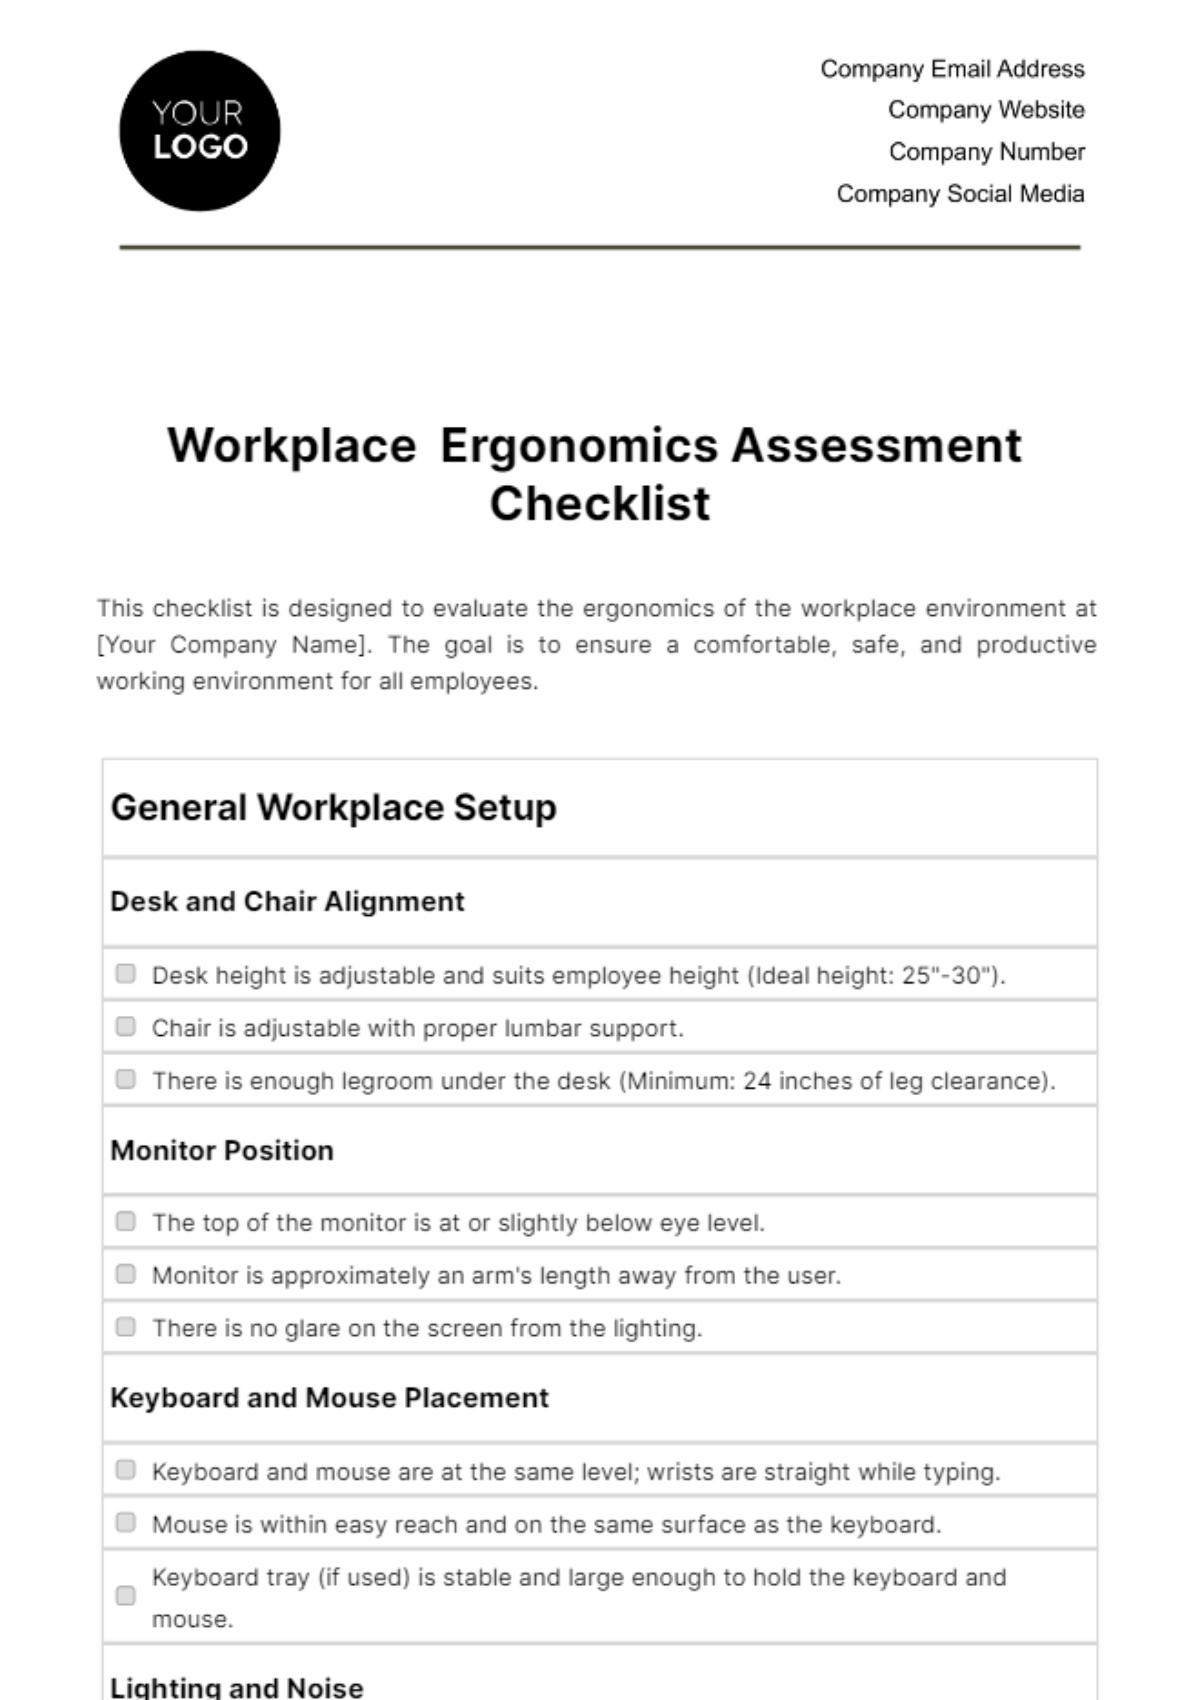 Free Workplace Ergonomics Assessment Checklist Template